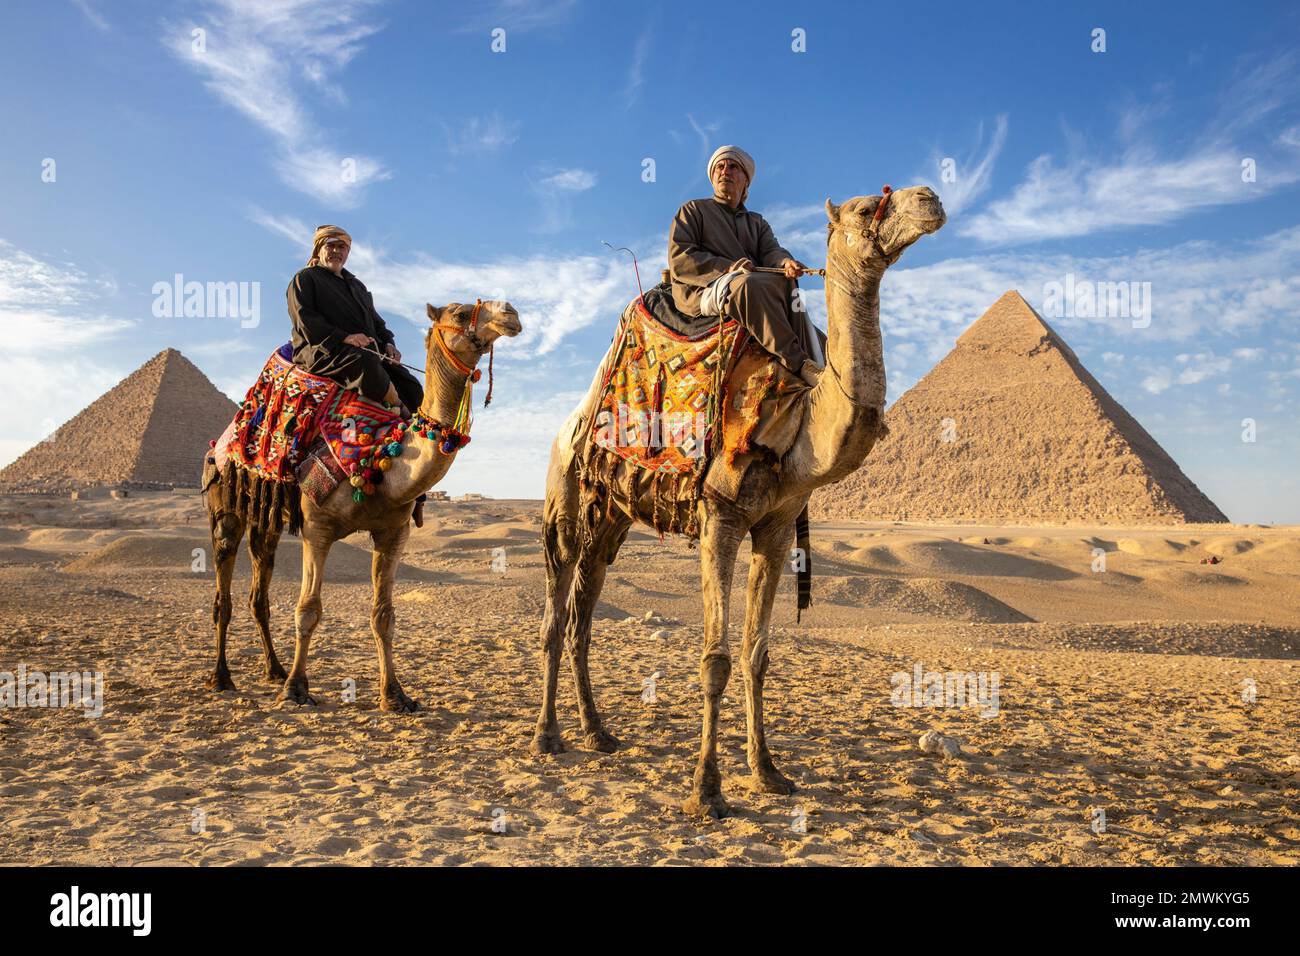 Pyramiden von Gizeh mit Kamelen bei Sonnenuntergang, Kairo, Ägypten Stockfoto